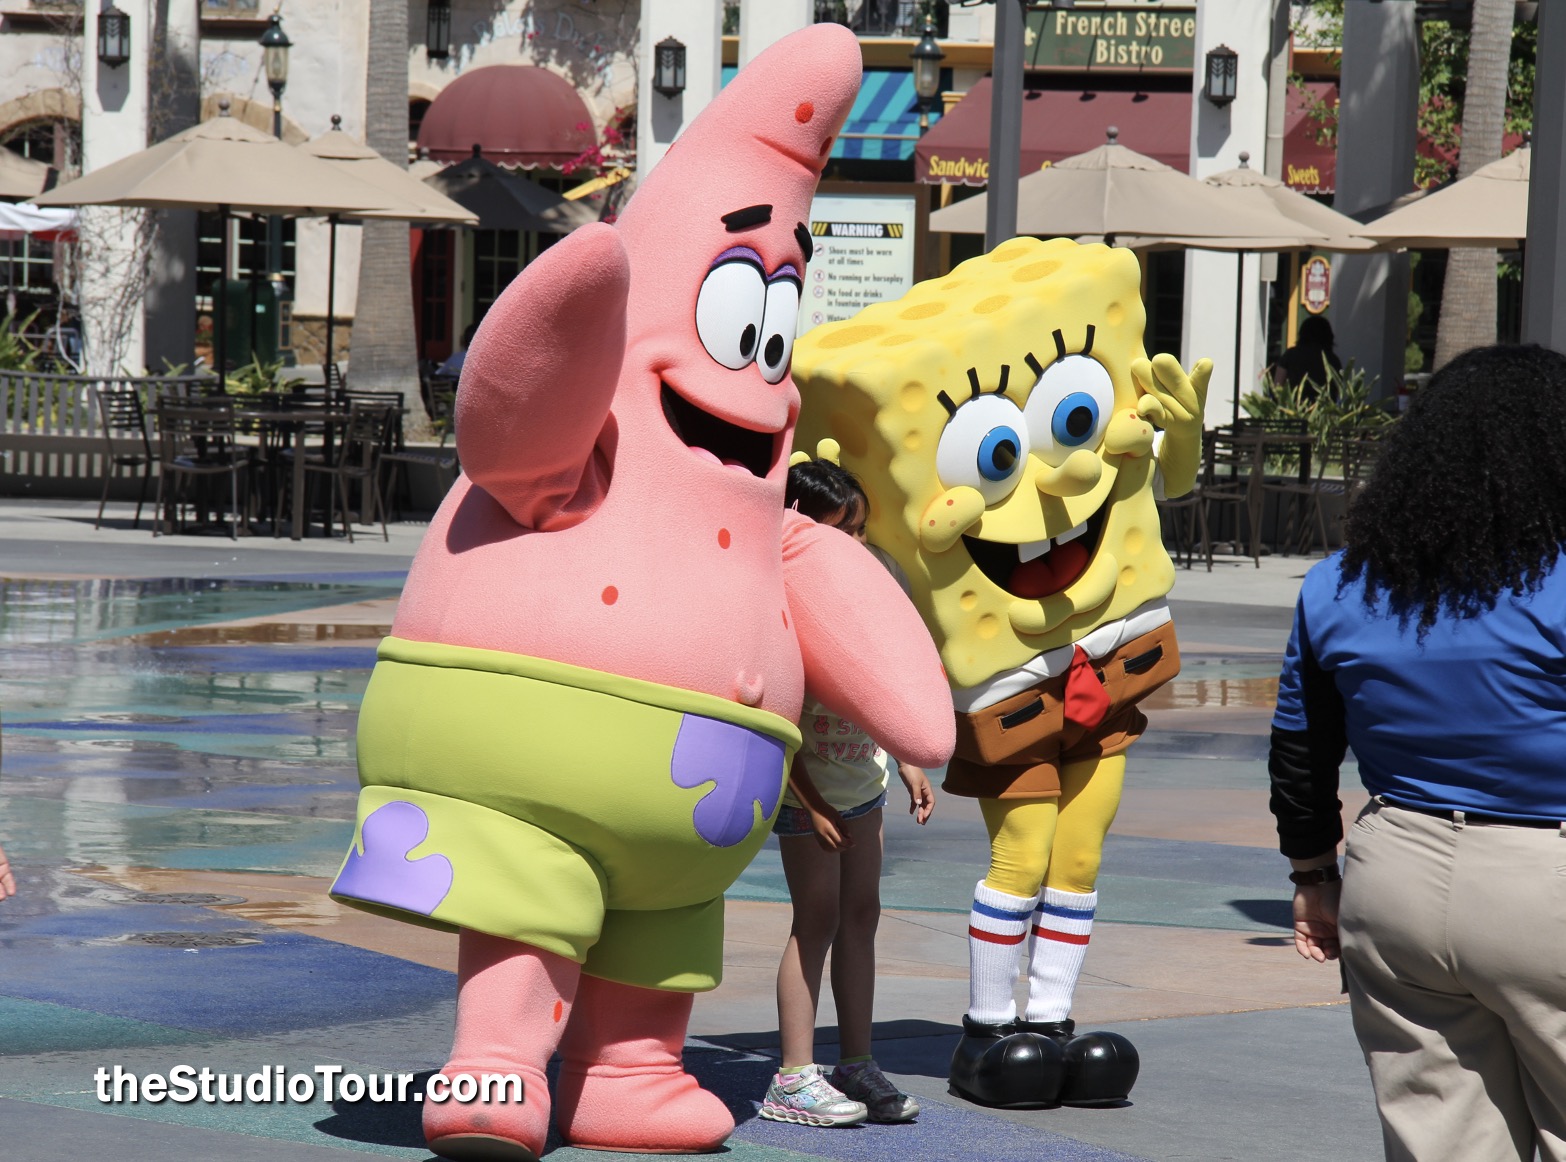 spongebob squarepants patrick the tour guide